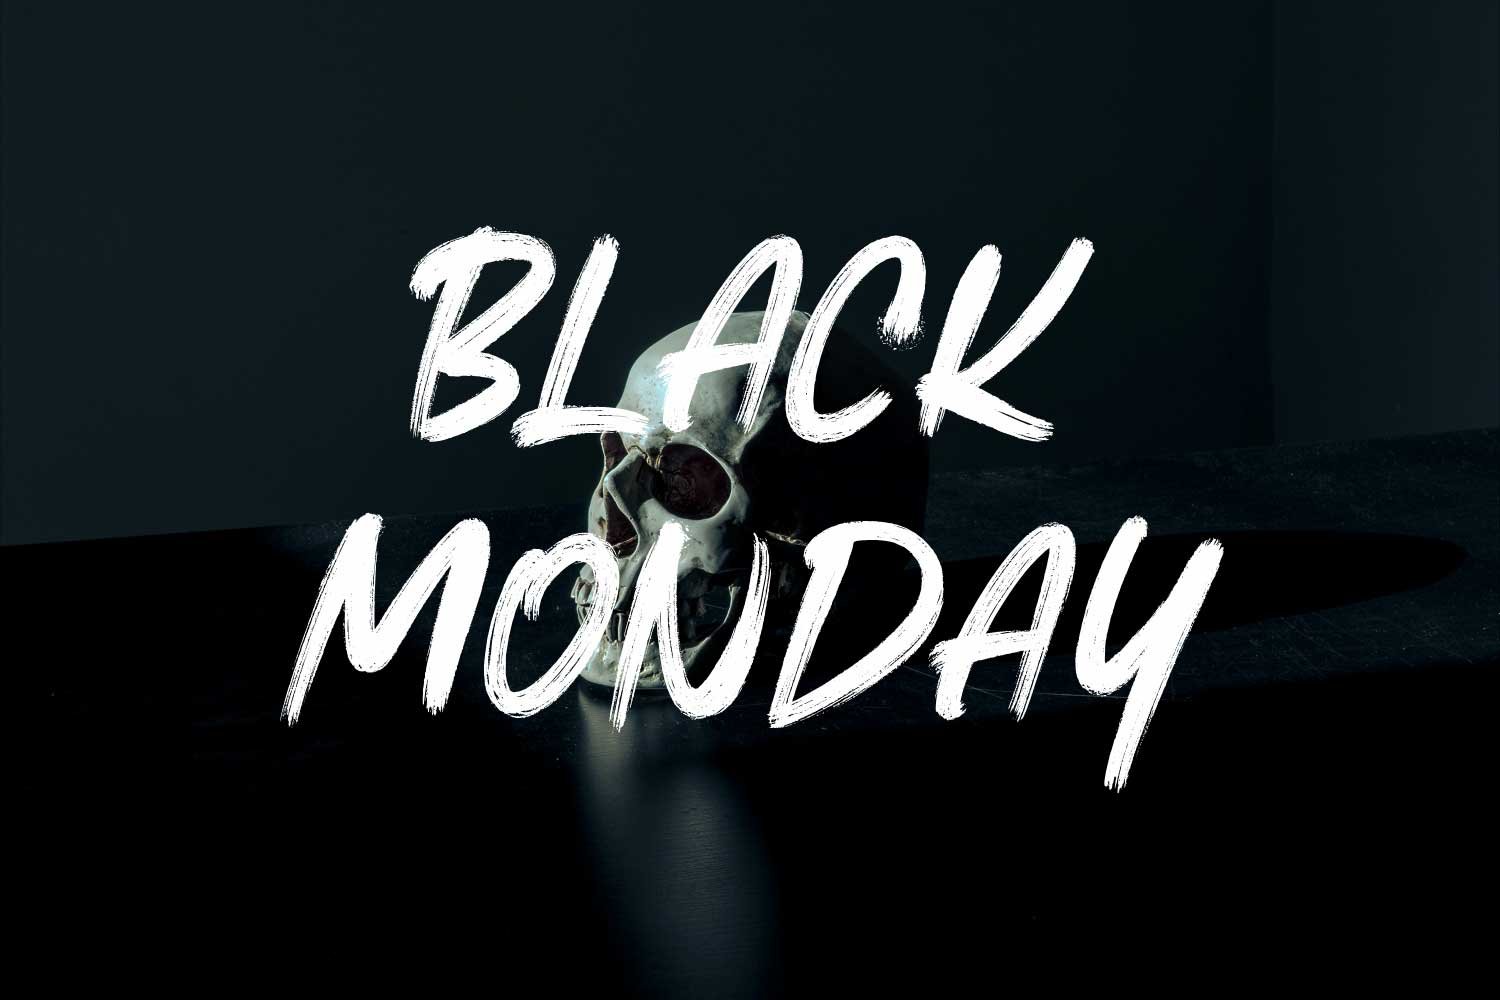 BLACK MONDAY cover image.